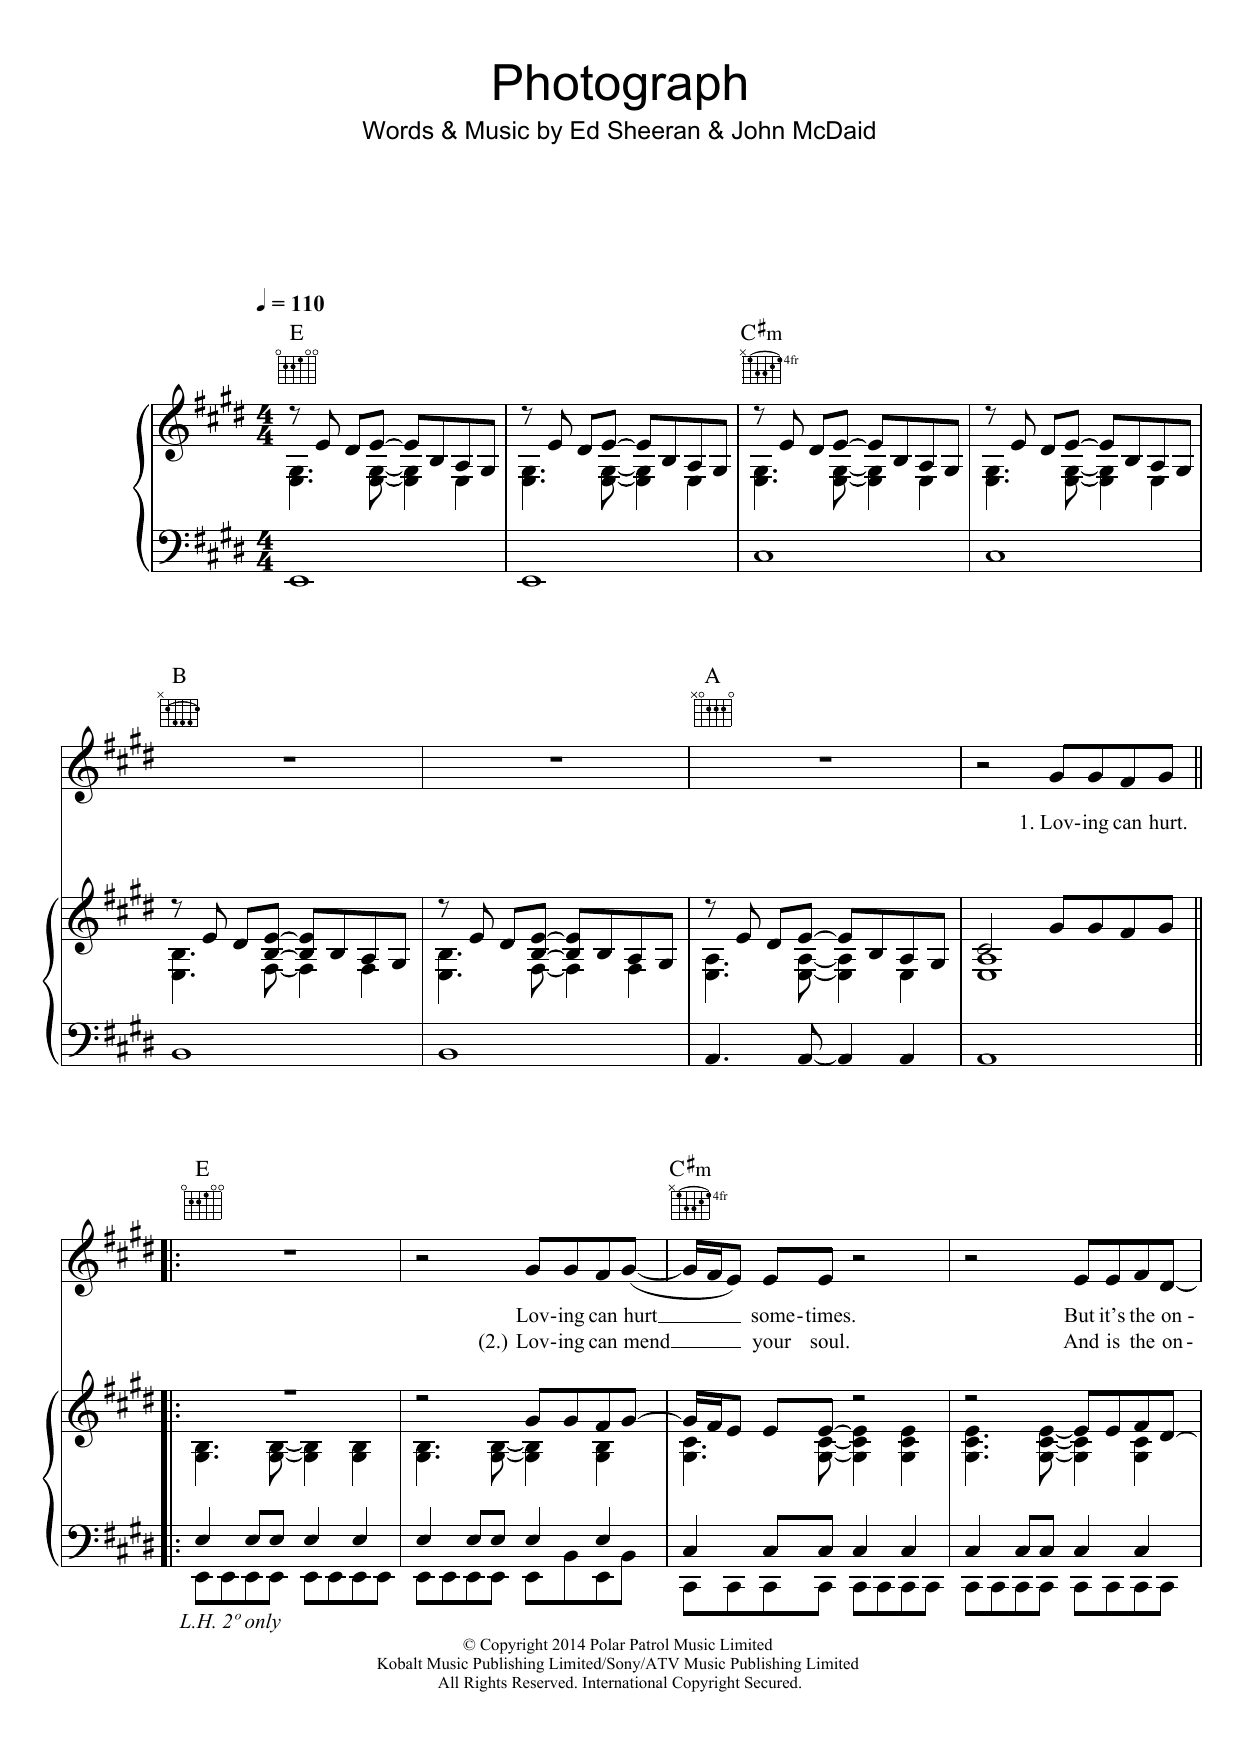 Ed Sheeran Photograph Sheet Music Notes & Chords for Piano, Vocal & Guitar (Right-Hand Melody) - Download or Print PDF